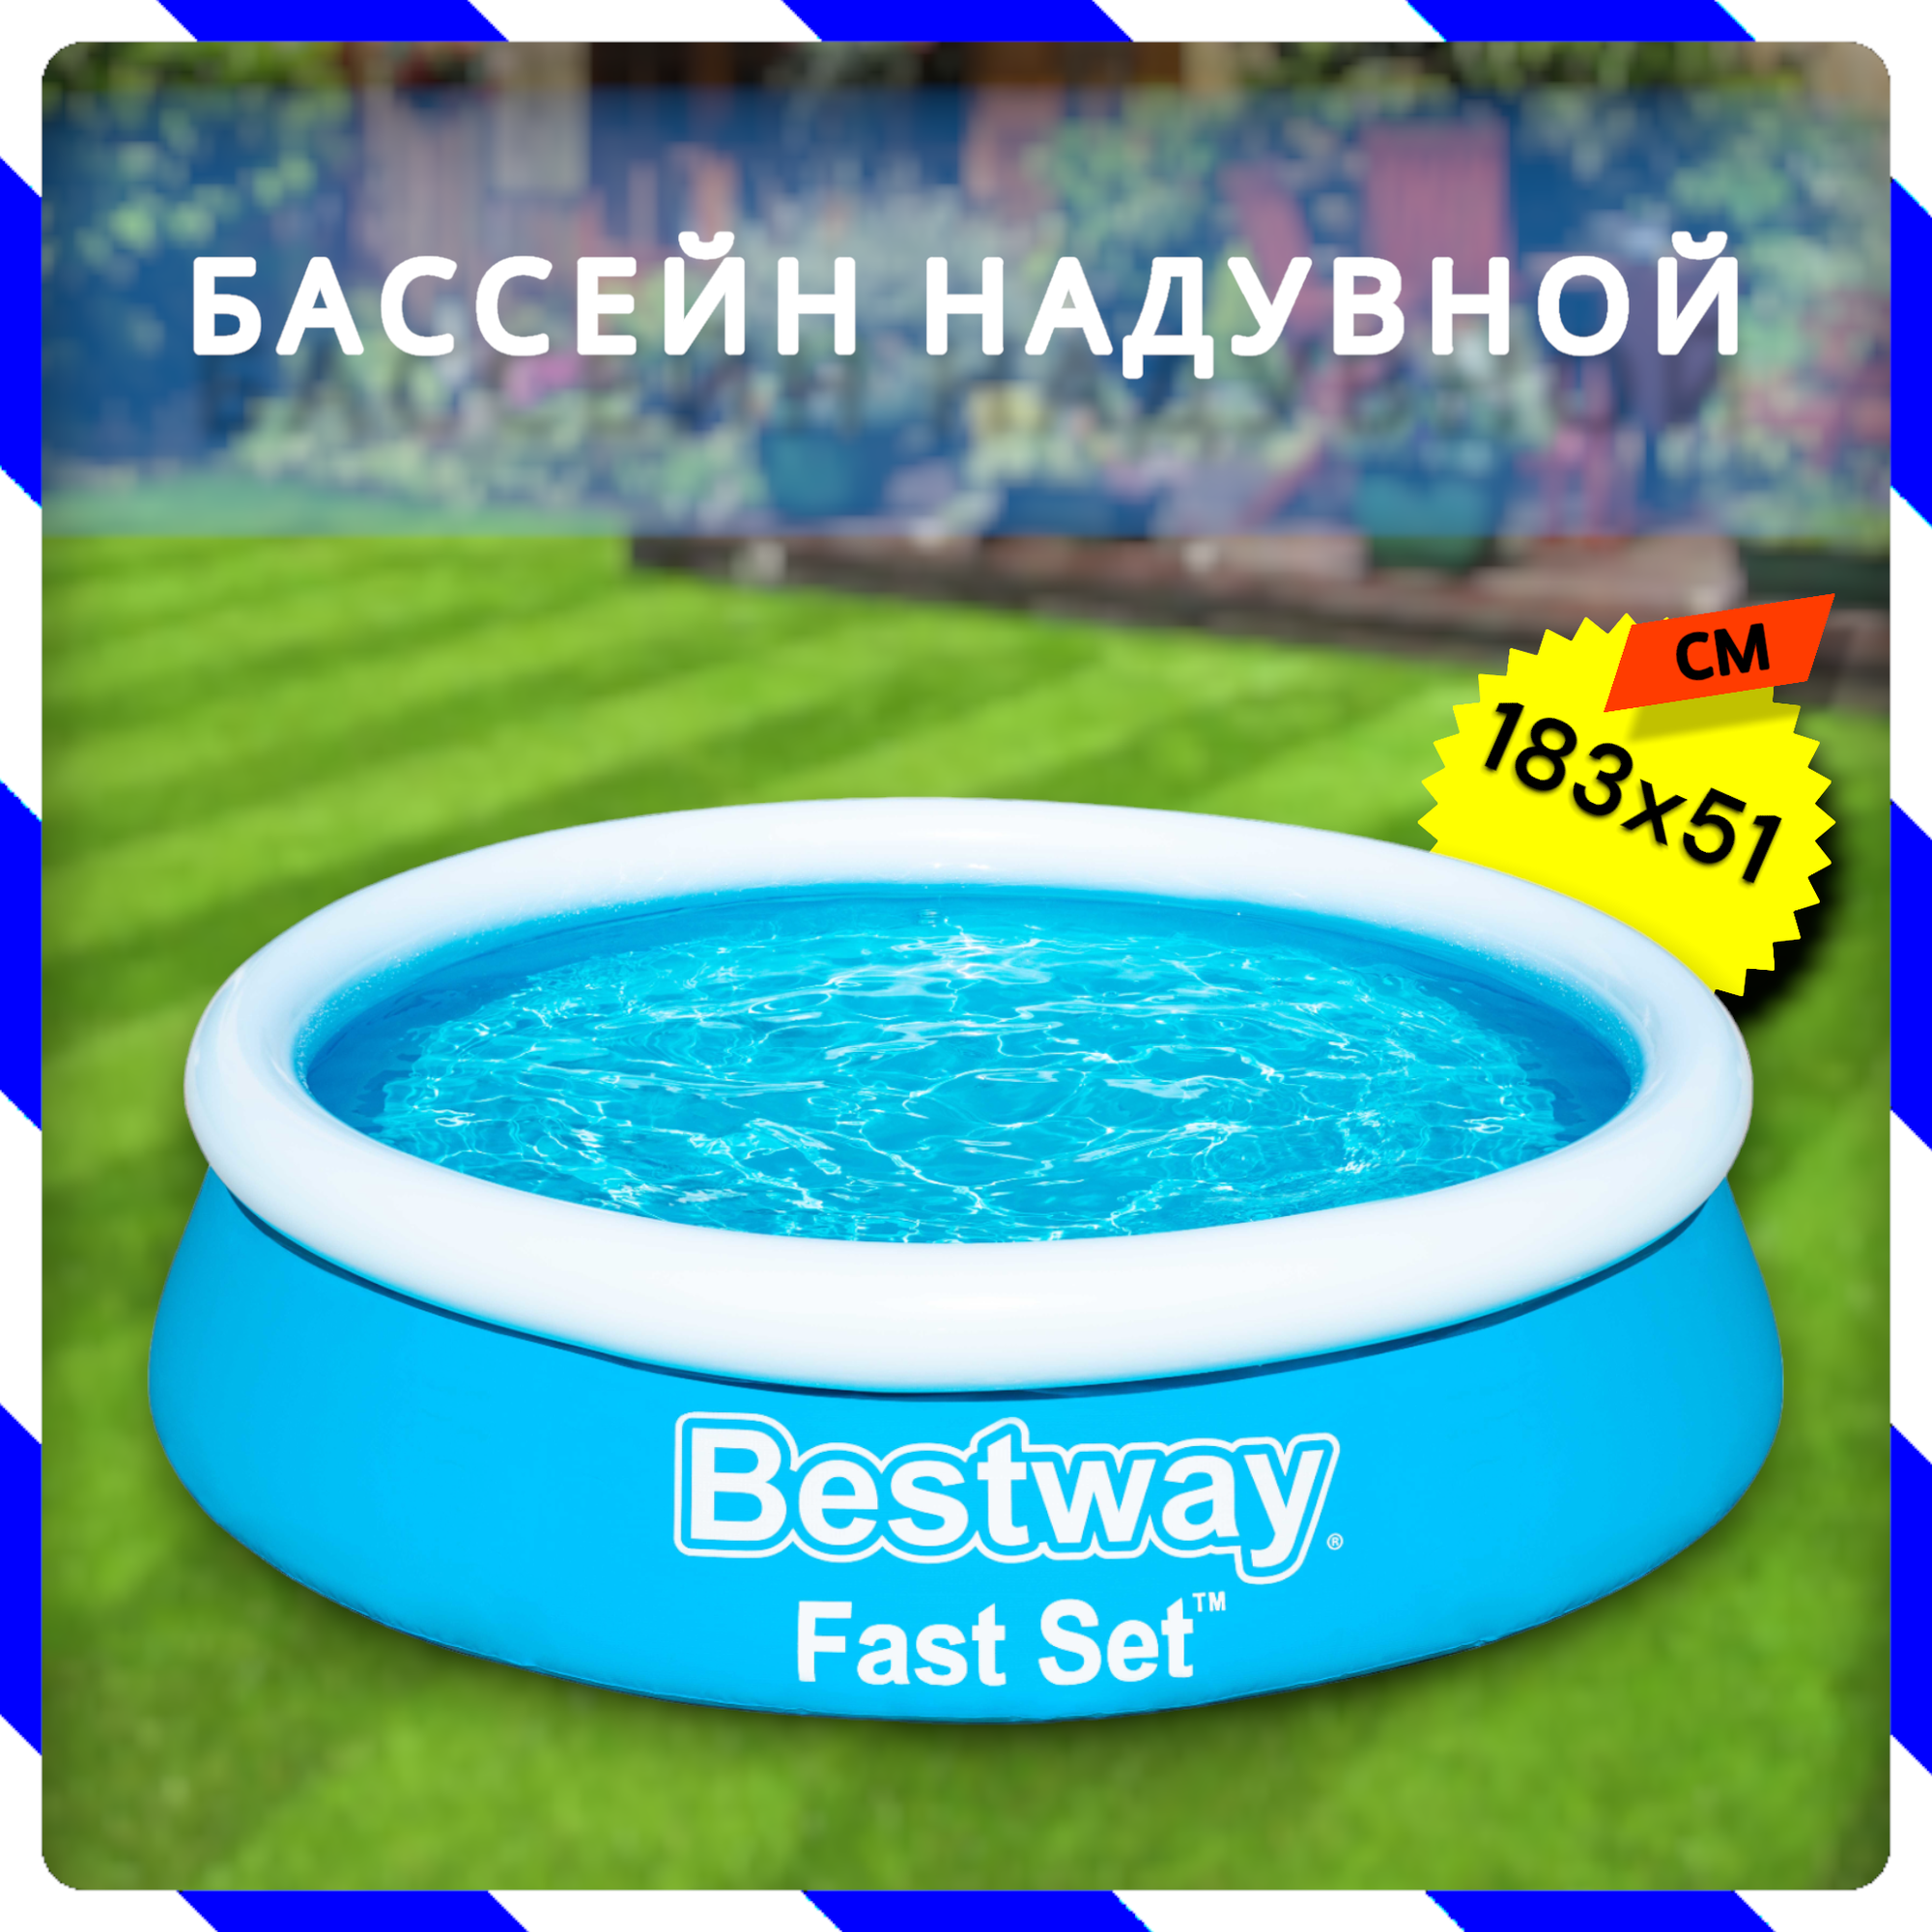 Бассейн надувной Bestway Fast Set Pools 183х51 см (57392)